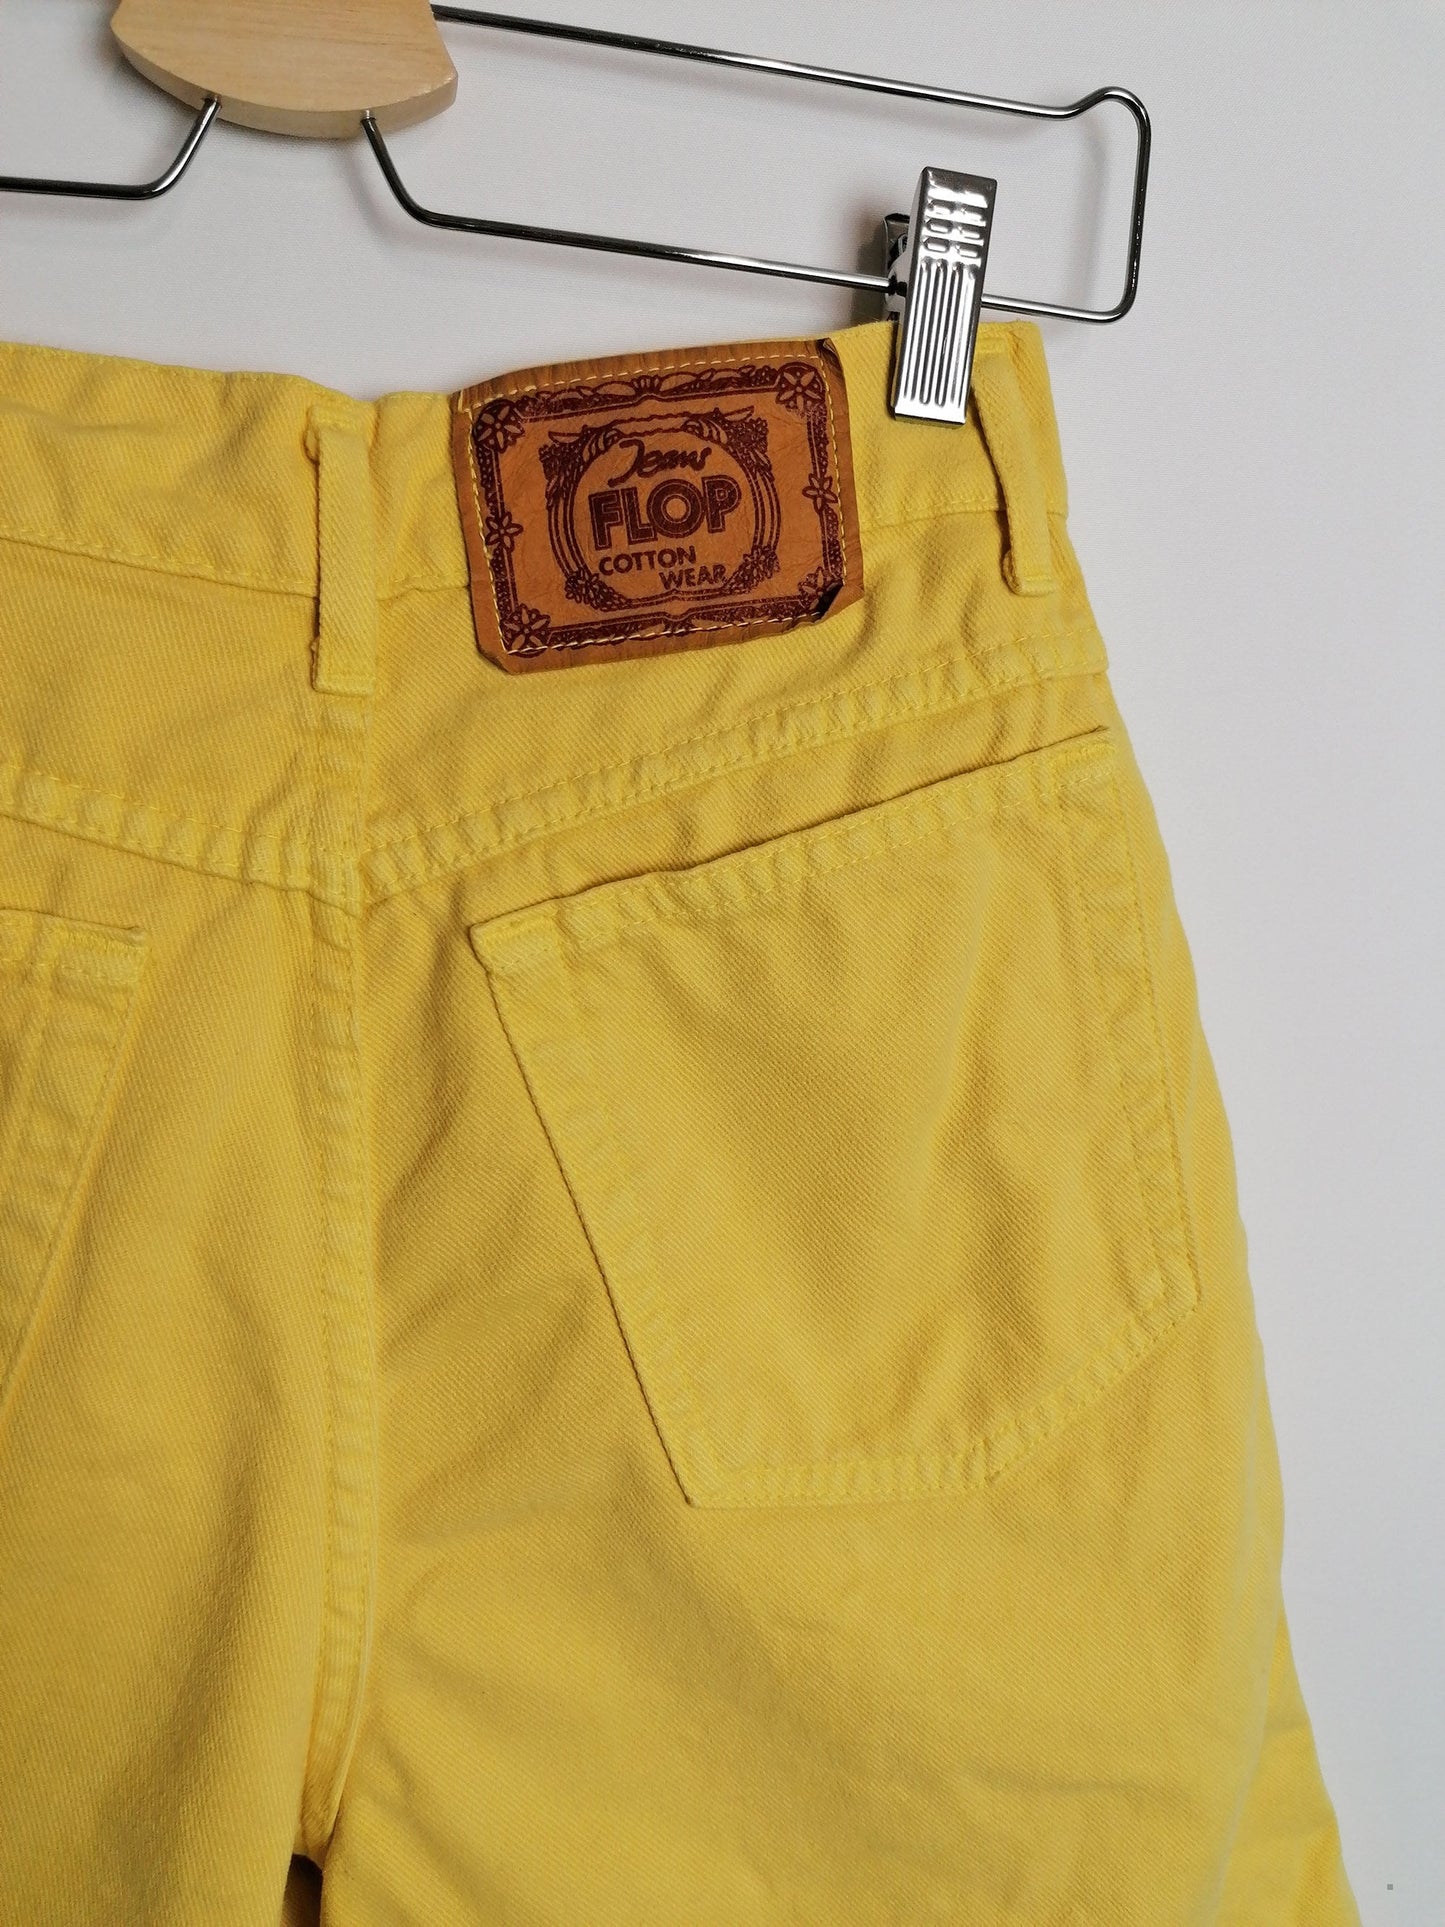 90's FLOP High Waist Retro Shorts Yellow  ~ size S-M / EU 36